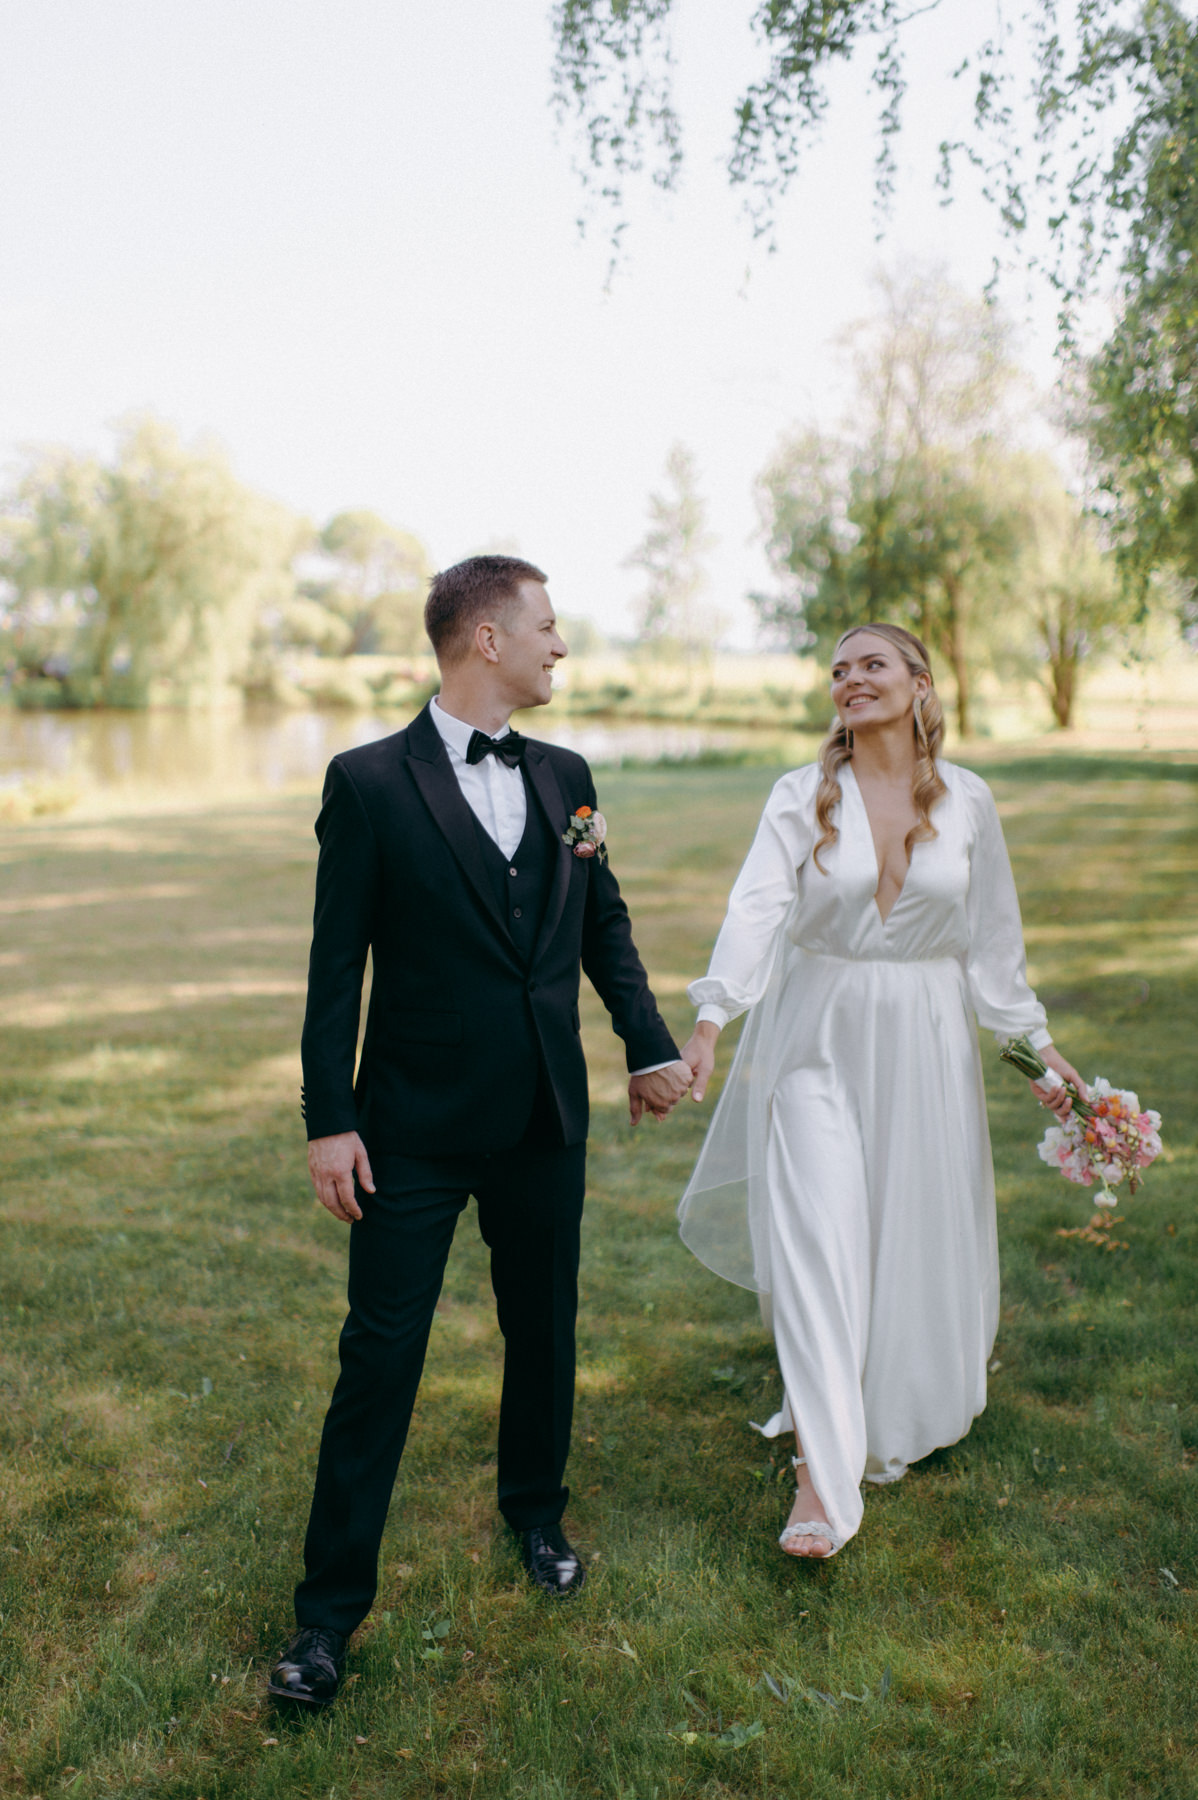 ROMANTIC WEDDING AT ZOLTNERS BREWERY BARN | Evelina & David 140